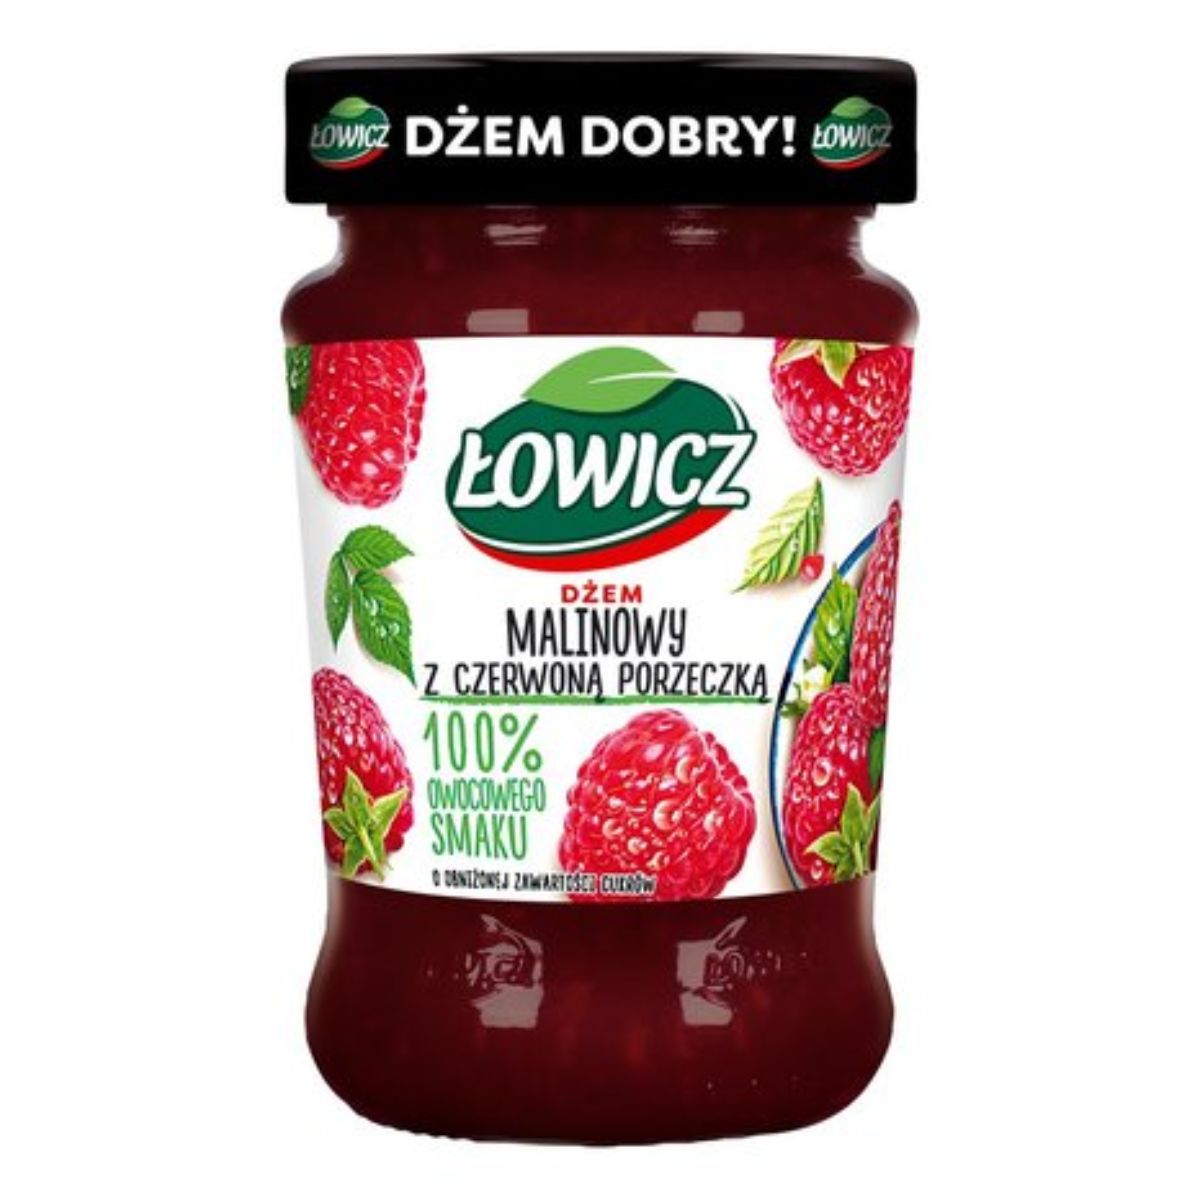 A jar of Lowicz - Raspberry Red Currant Jam Reduced Sugar - 280g.